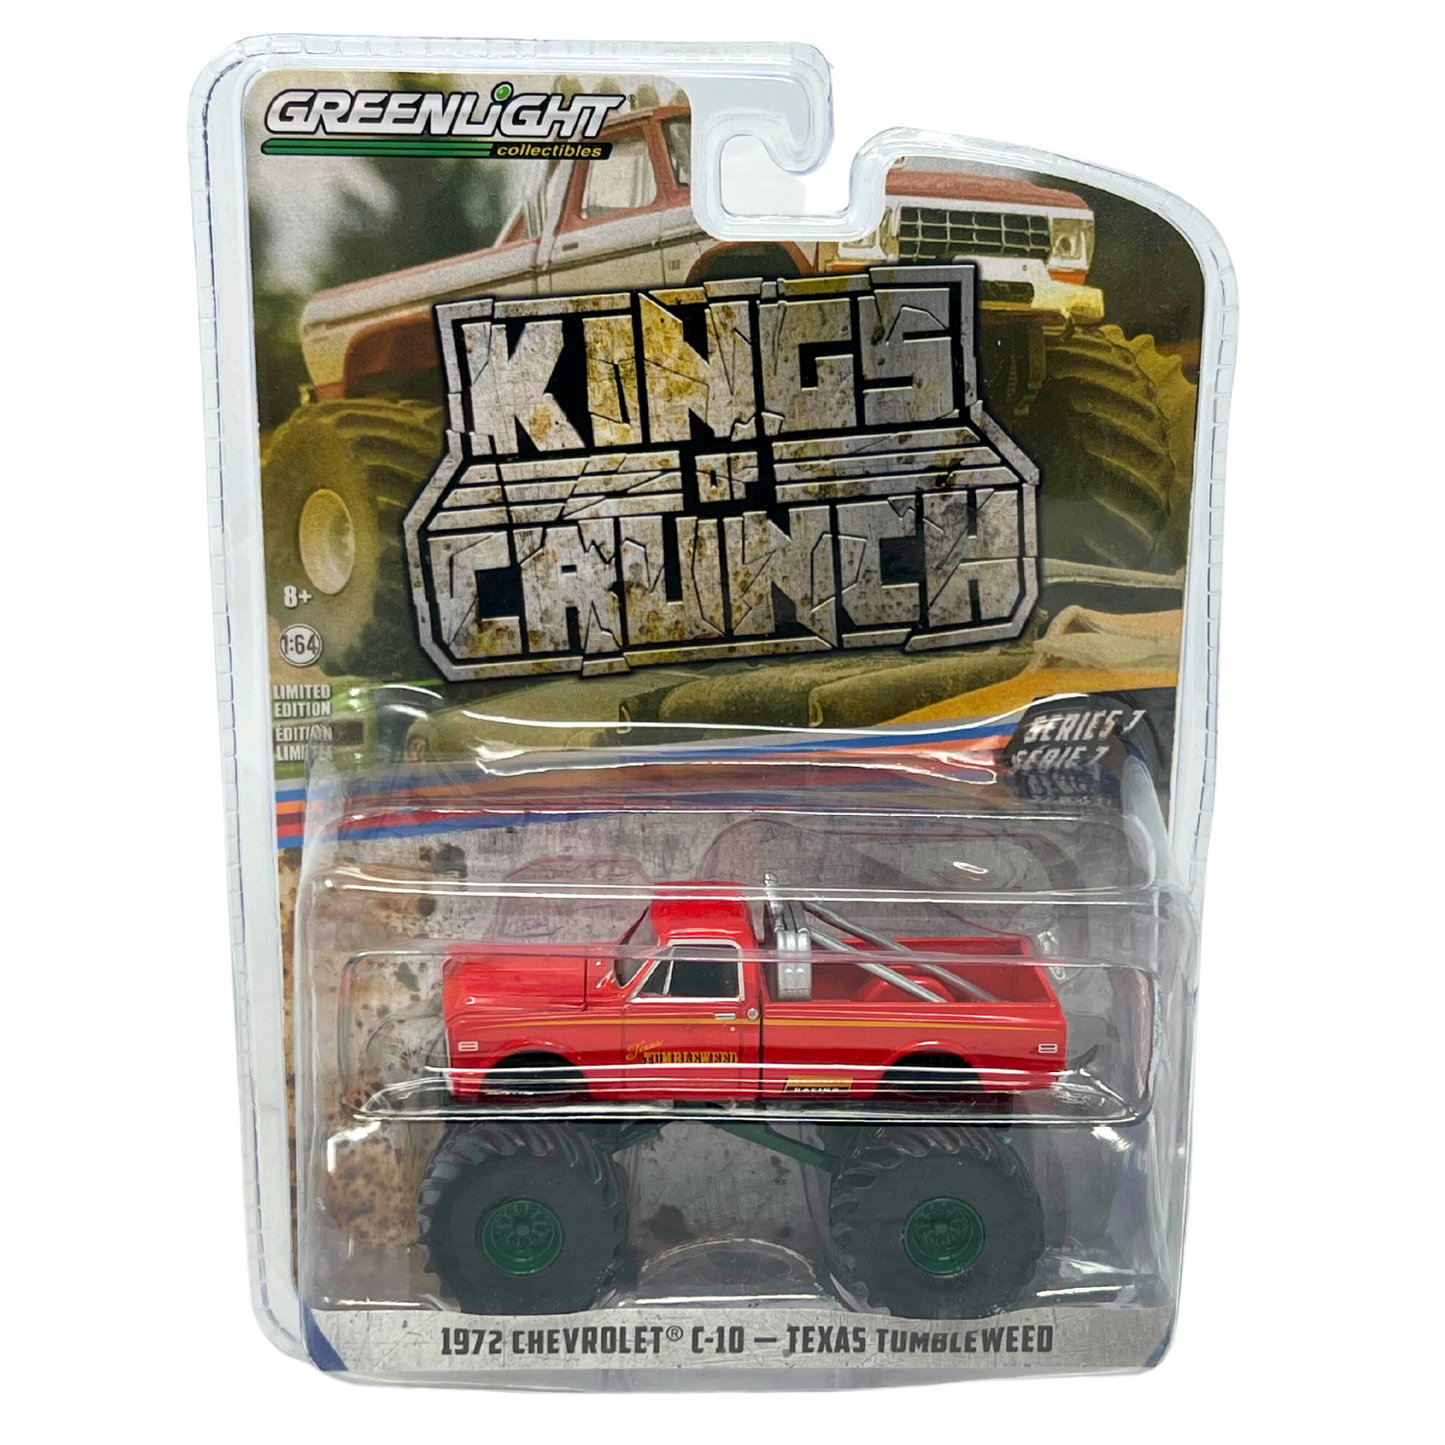 Greenlight Kings of Crunch 1972 Chevrolet C-10 Green Machine 1:64 Diecast